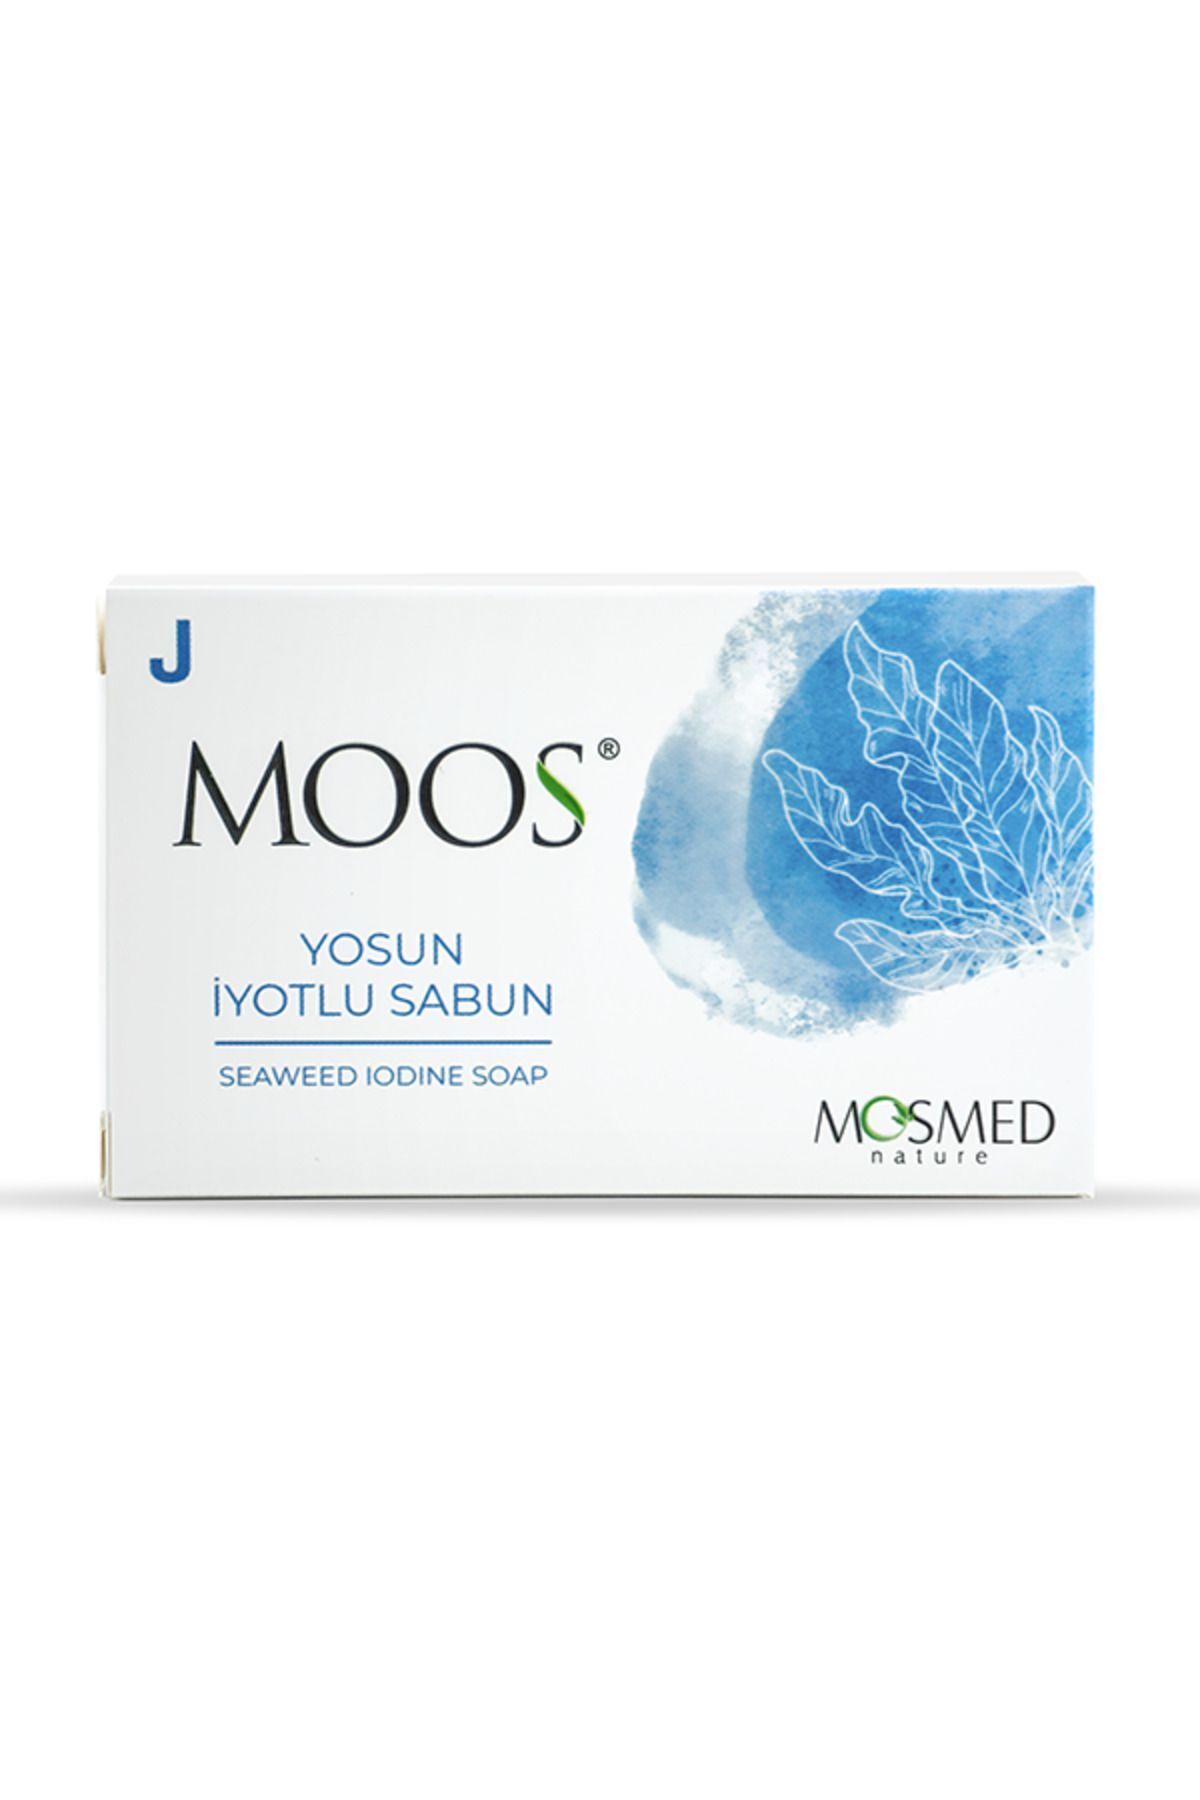 Moos J Yosun Iyotlu Sabun 100 gr